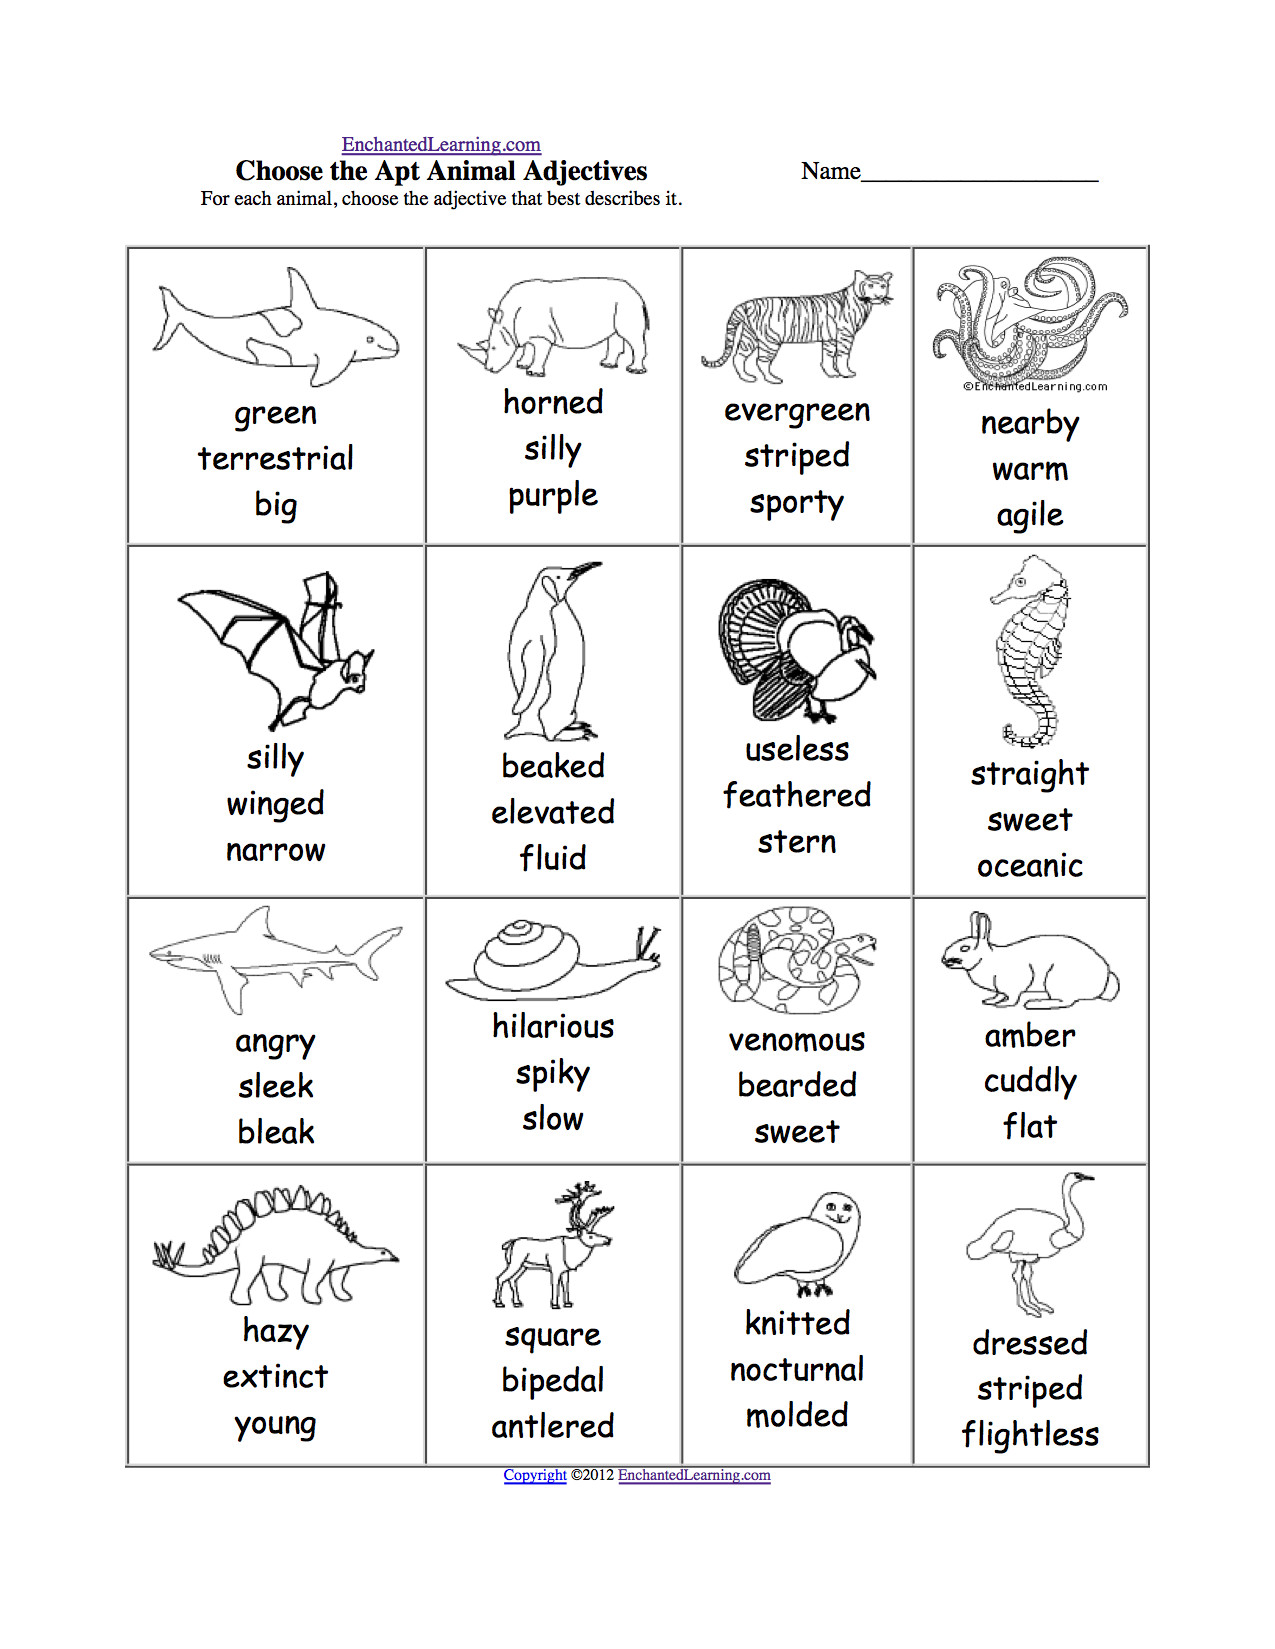 Farm Animals Vocabulary